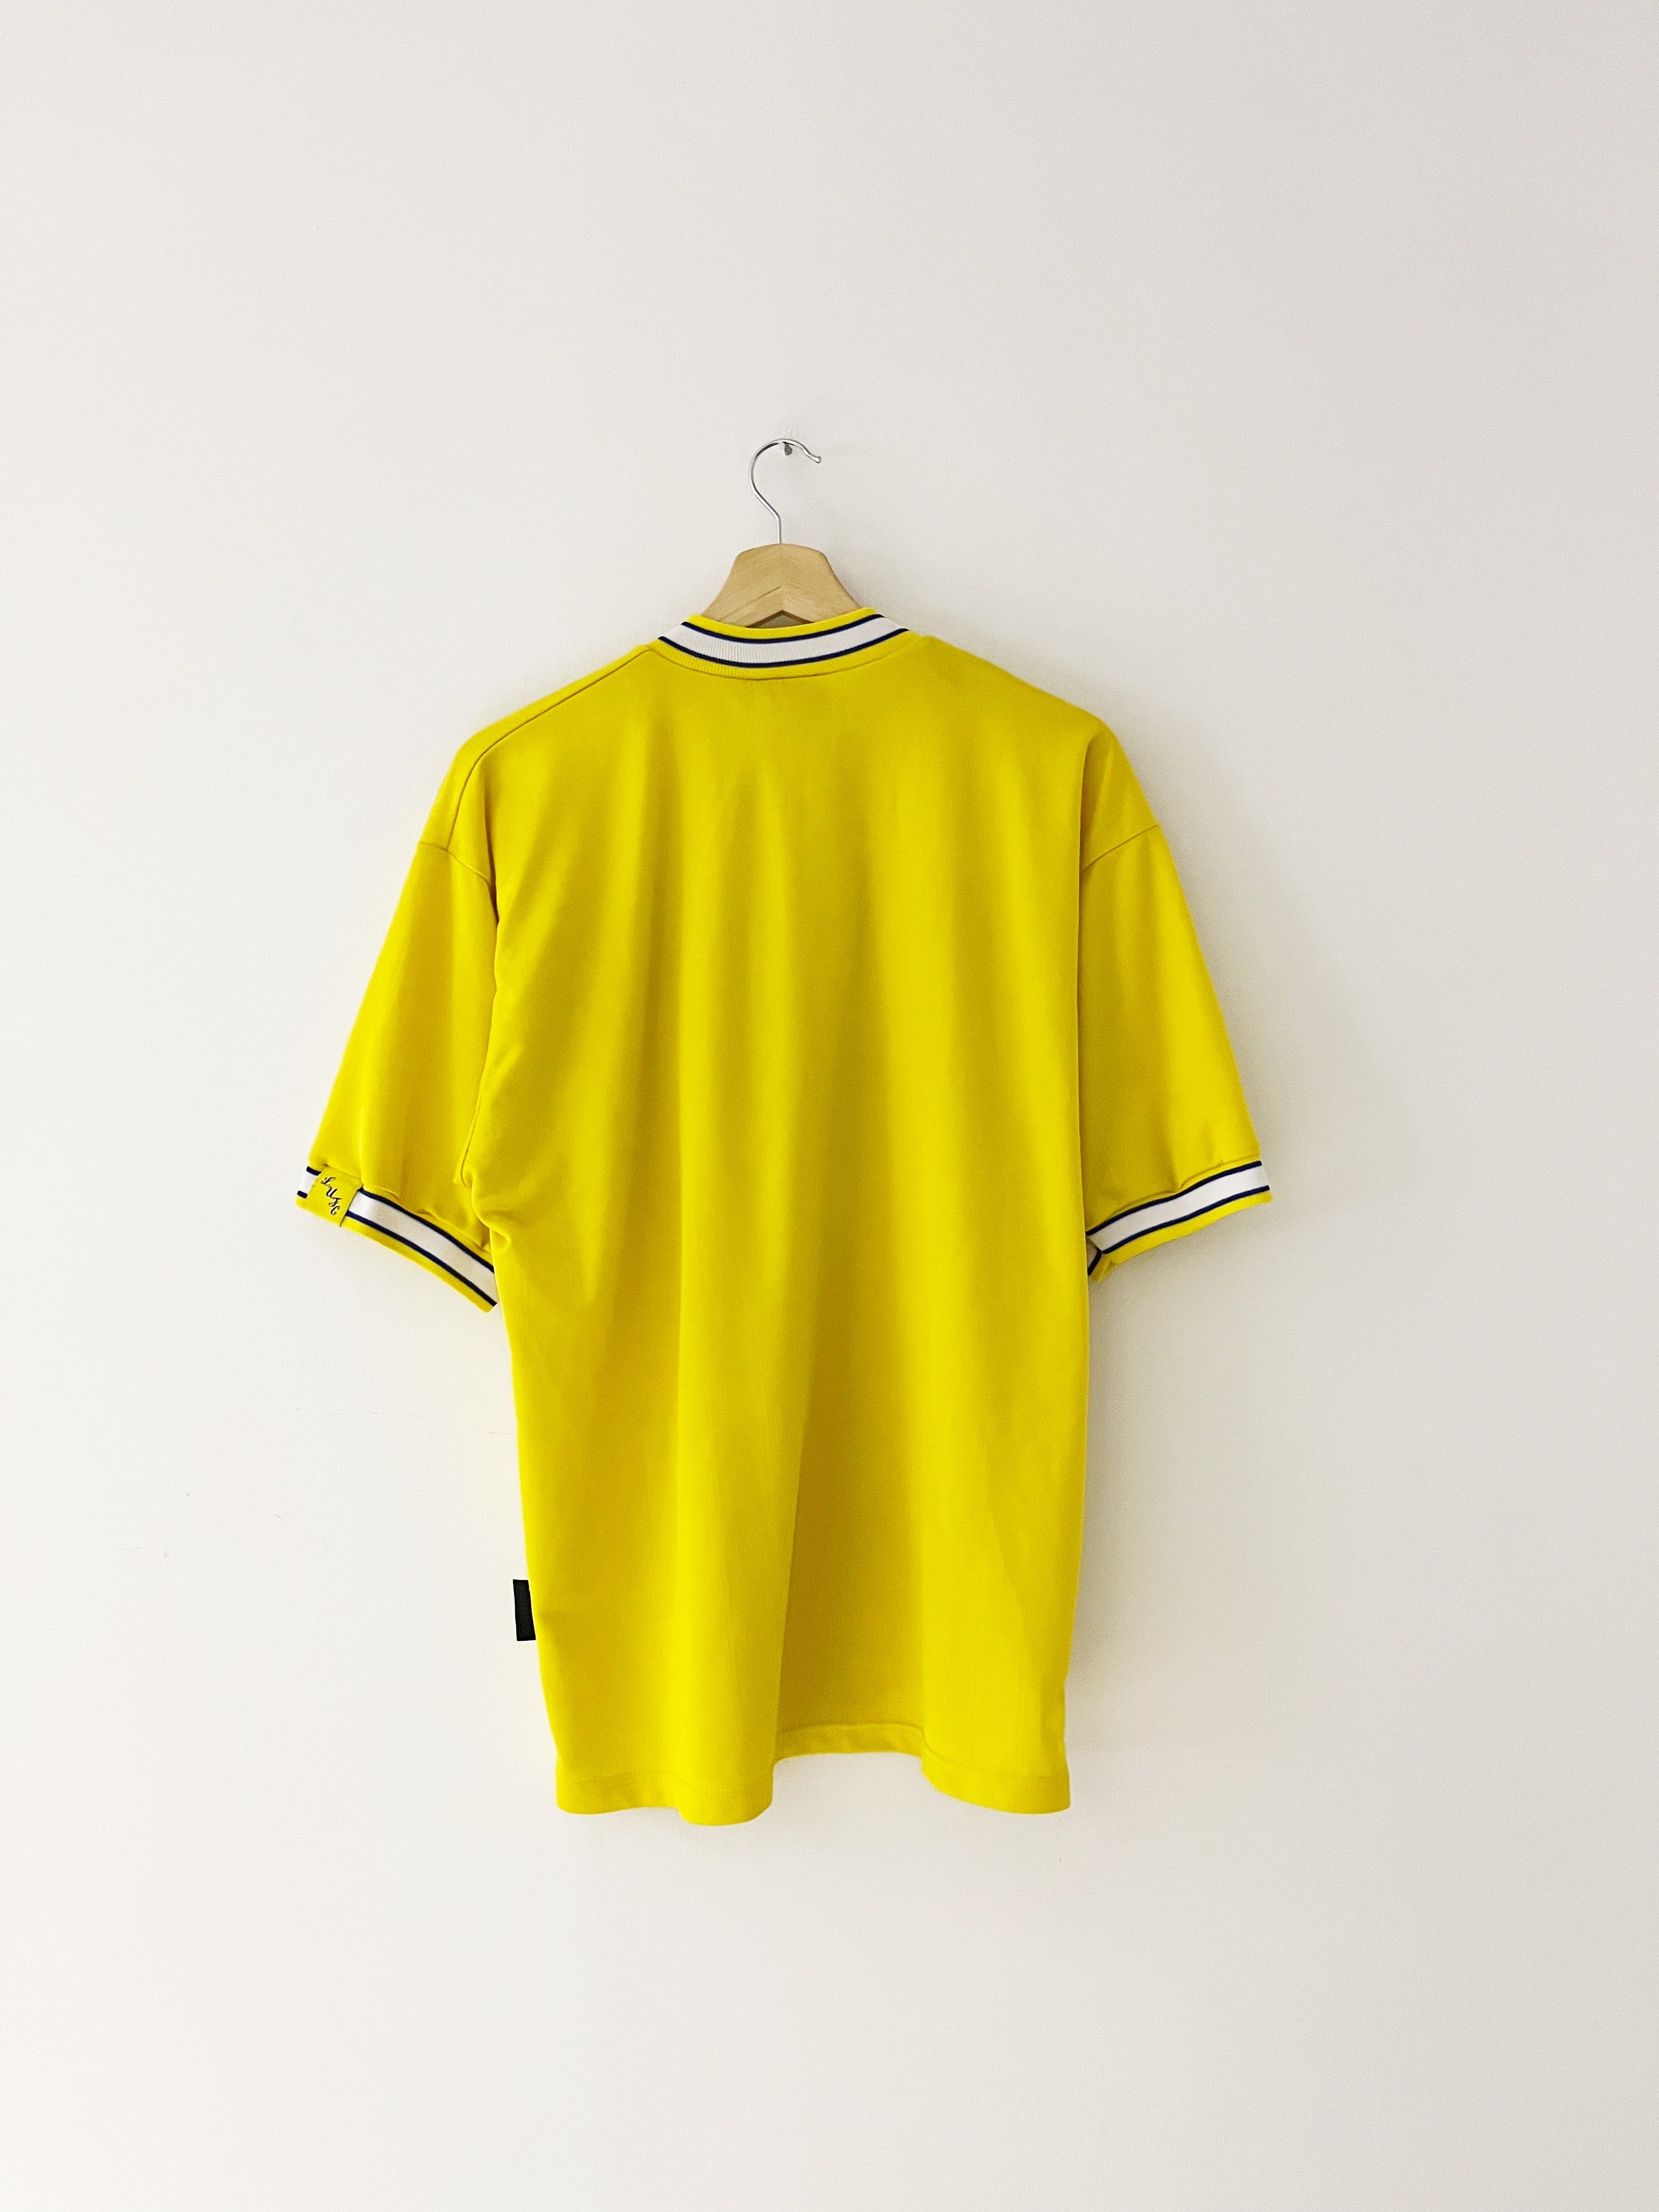 1996/99 Leeds United Away Shirt (M) 7.5/10